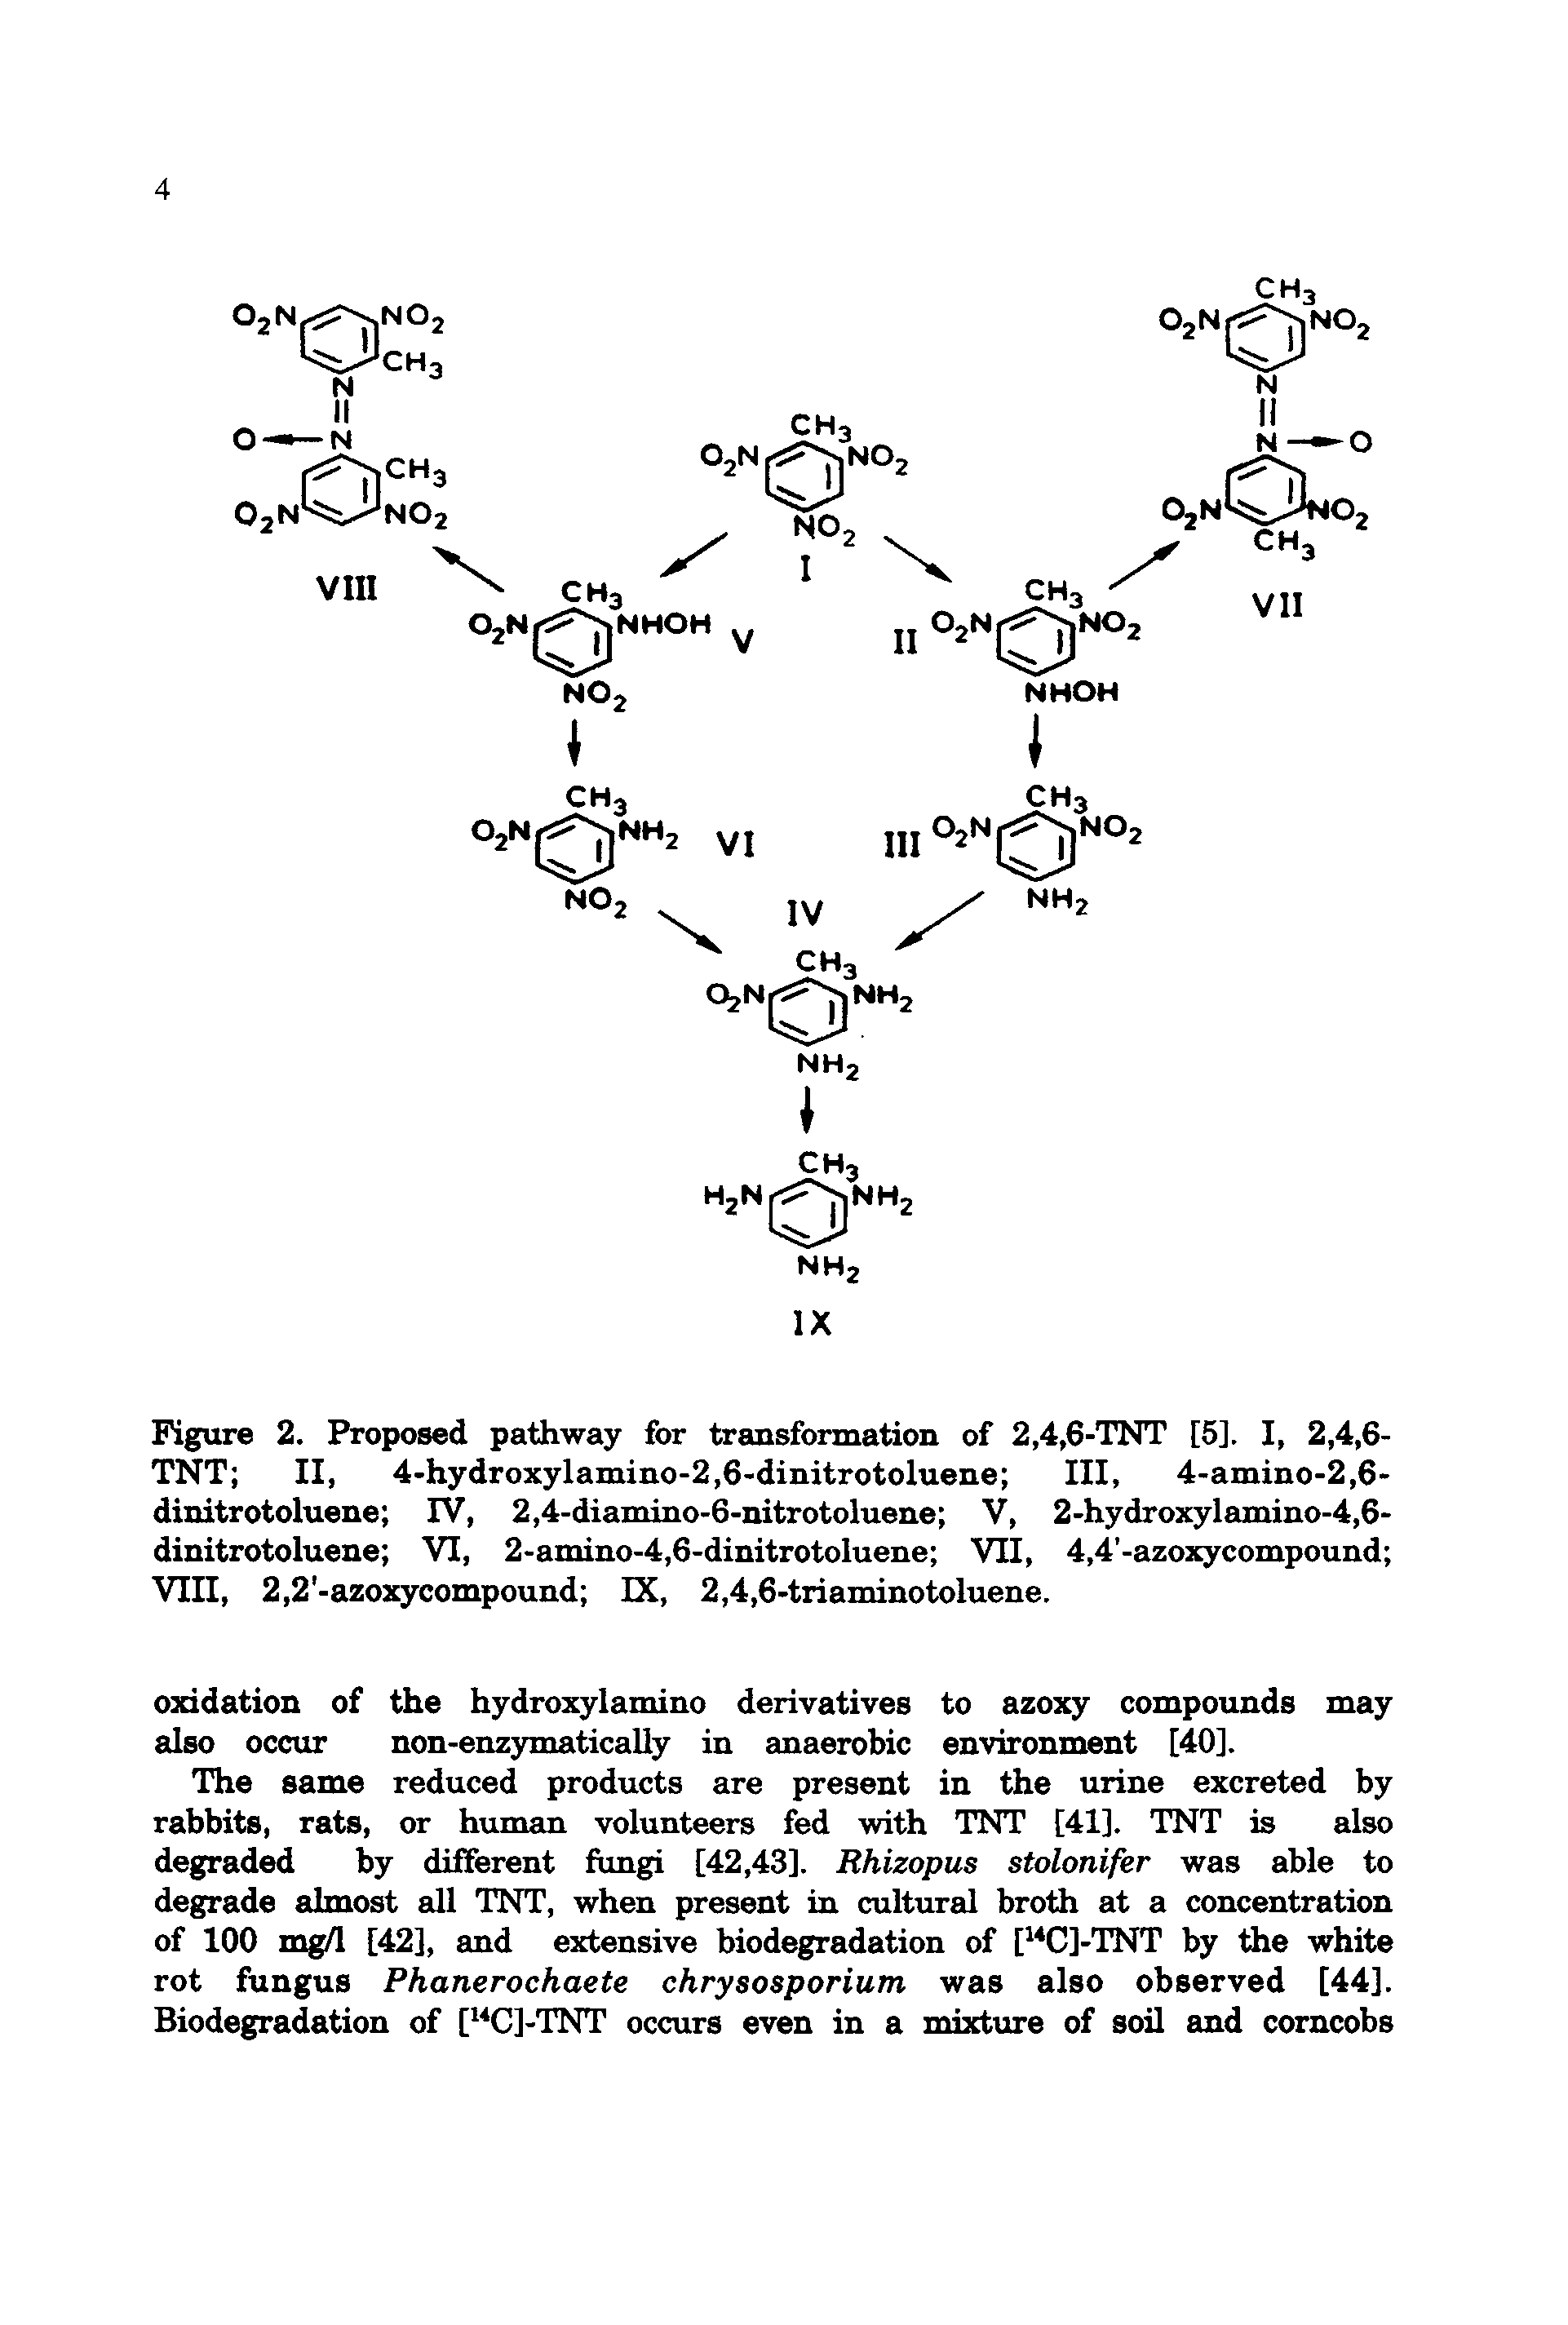 Figure 2. Proposed pathway for transformation of 2,4,6-TNT [5]. I, 2,4,6-TNT II, 4-hydroxylamino-2,6-dinitrotoluene III, 4-amino-2,6-dinitrotoluene IV, 2,4-diamino-6-nitrotoluene V, 2-hydroxylamino-4,6-dinitrotoluene VI, 2-amino-4,6-dinitrotoluene VII, 4,4 -azoxycompound VIII, 2,2 -azoxycompound IX, 2,4,6-triaminotoluene.